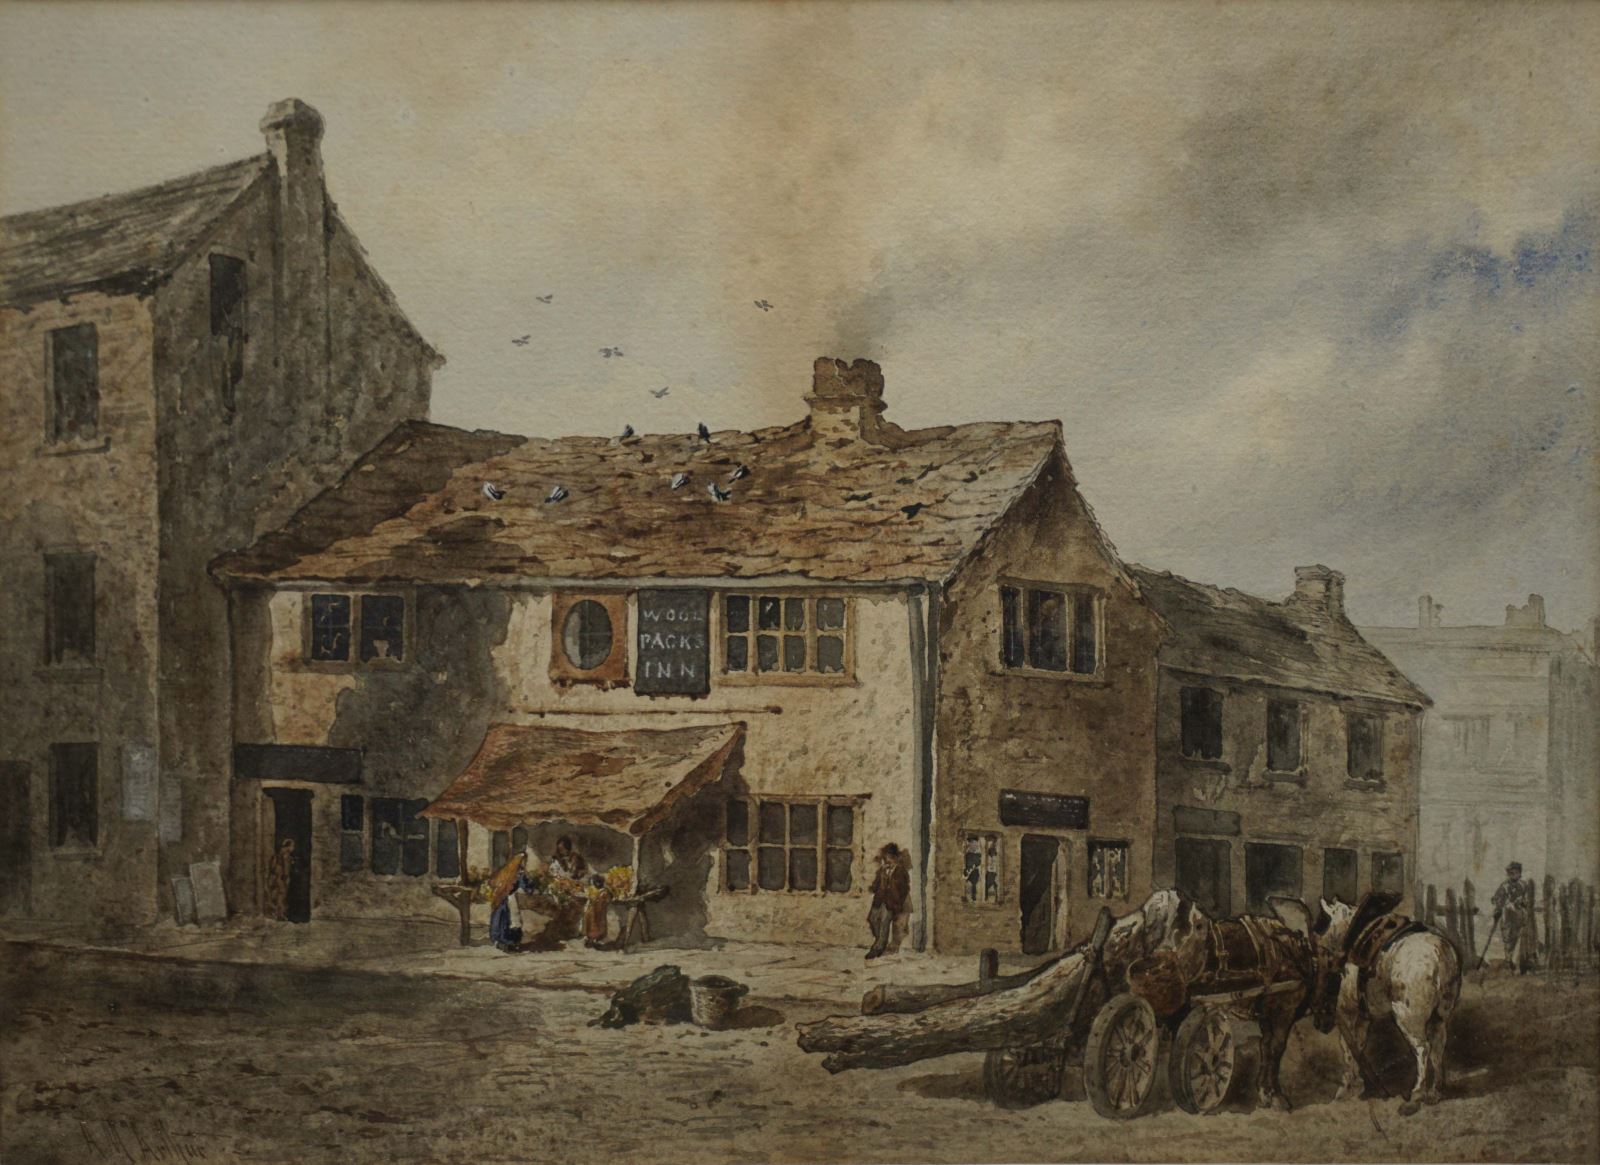 Arthur McArthur c1828-1892 AM02 'Wool Packs Inn' (Lower Kirkgate, Bradford)  watercolour 37x26cm  £250  mr